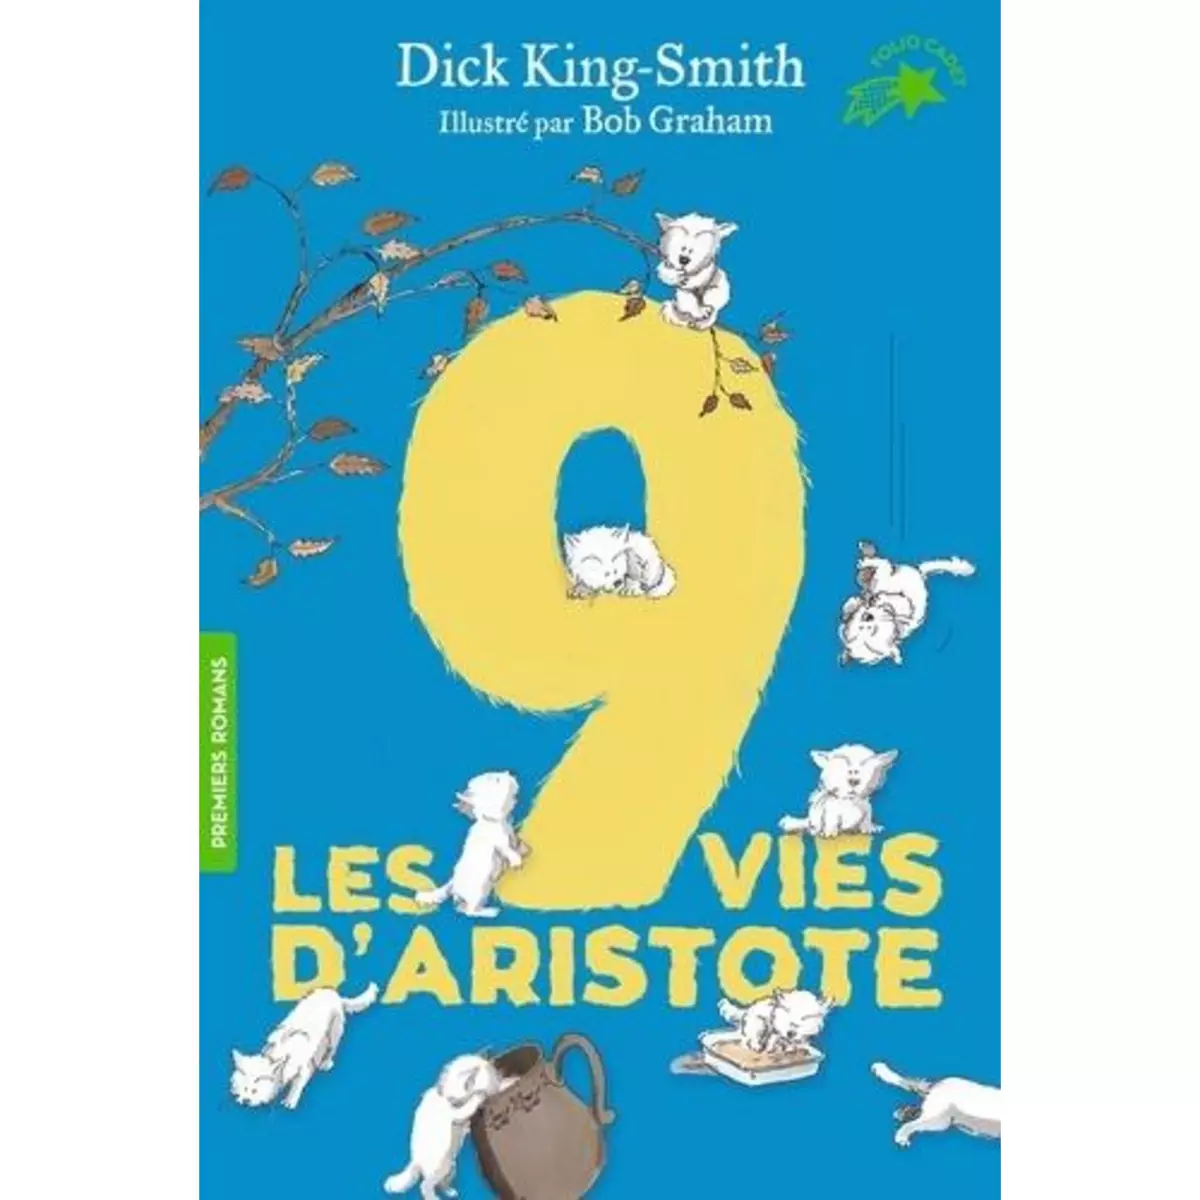  LES 9 VIES D'ARISTOTE, King-Smith Dick